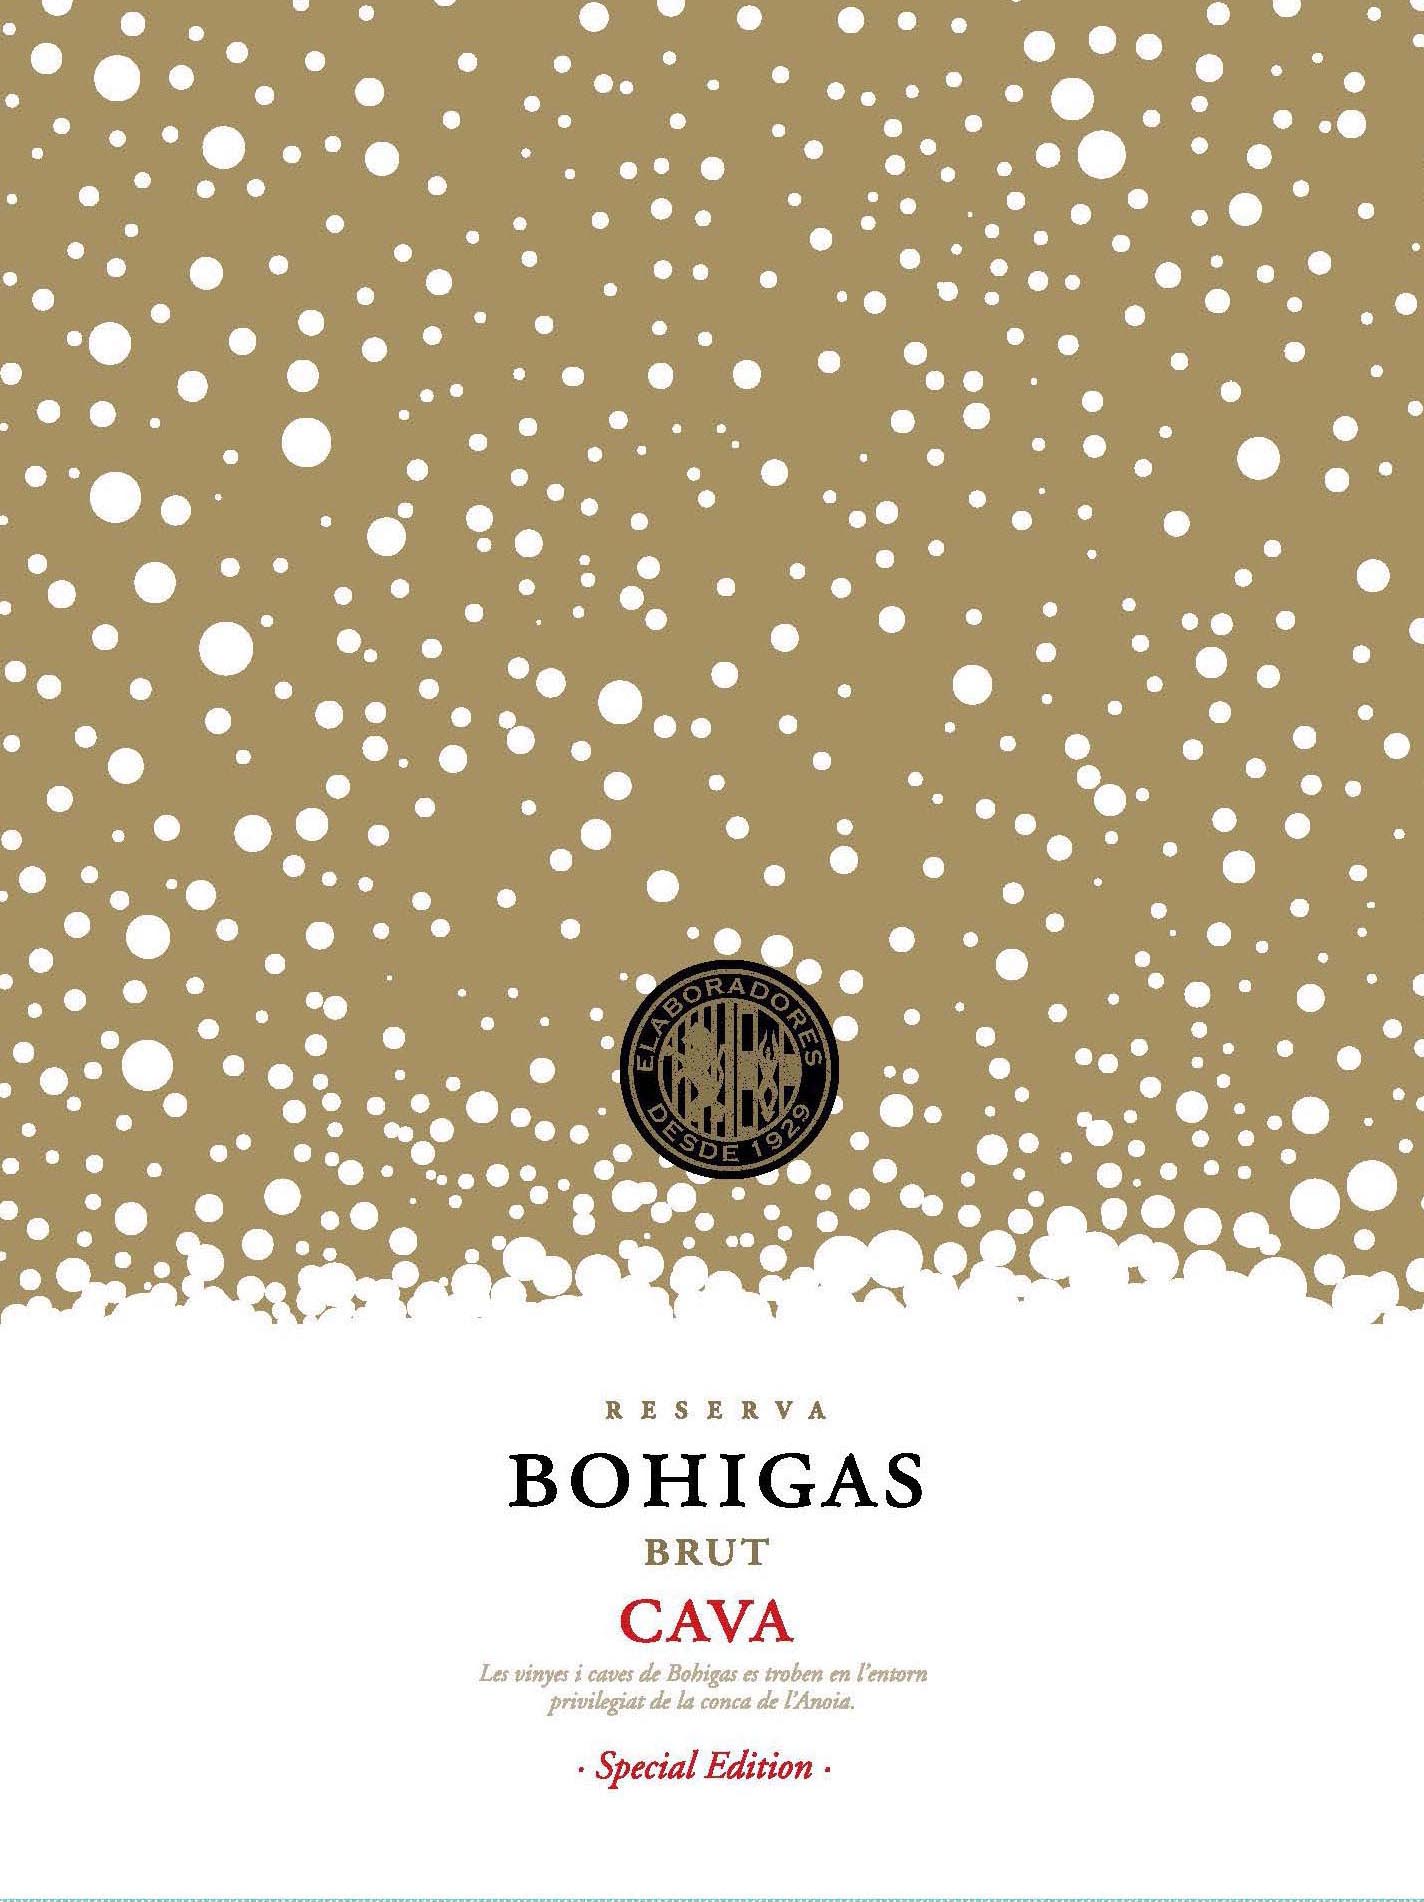 Bohigas - Cava Brut - Special Edition label